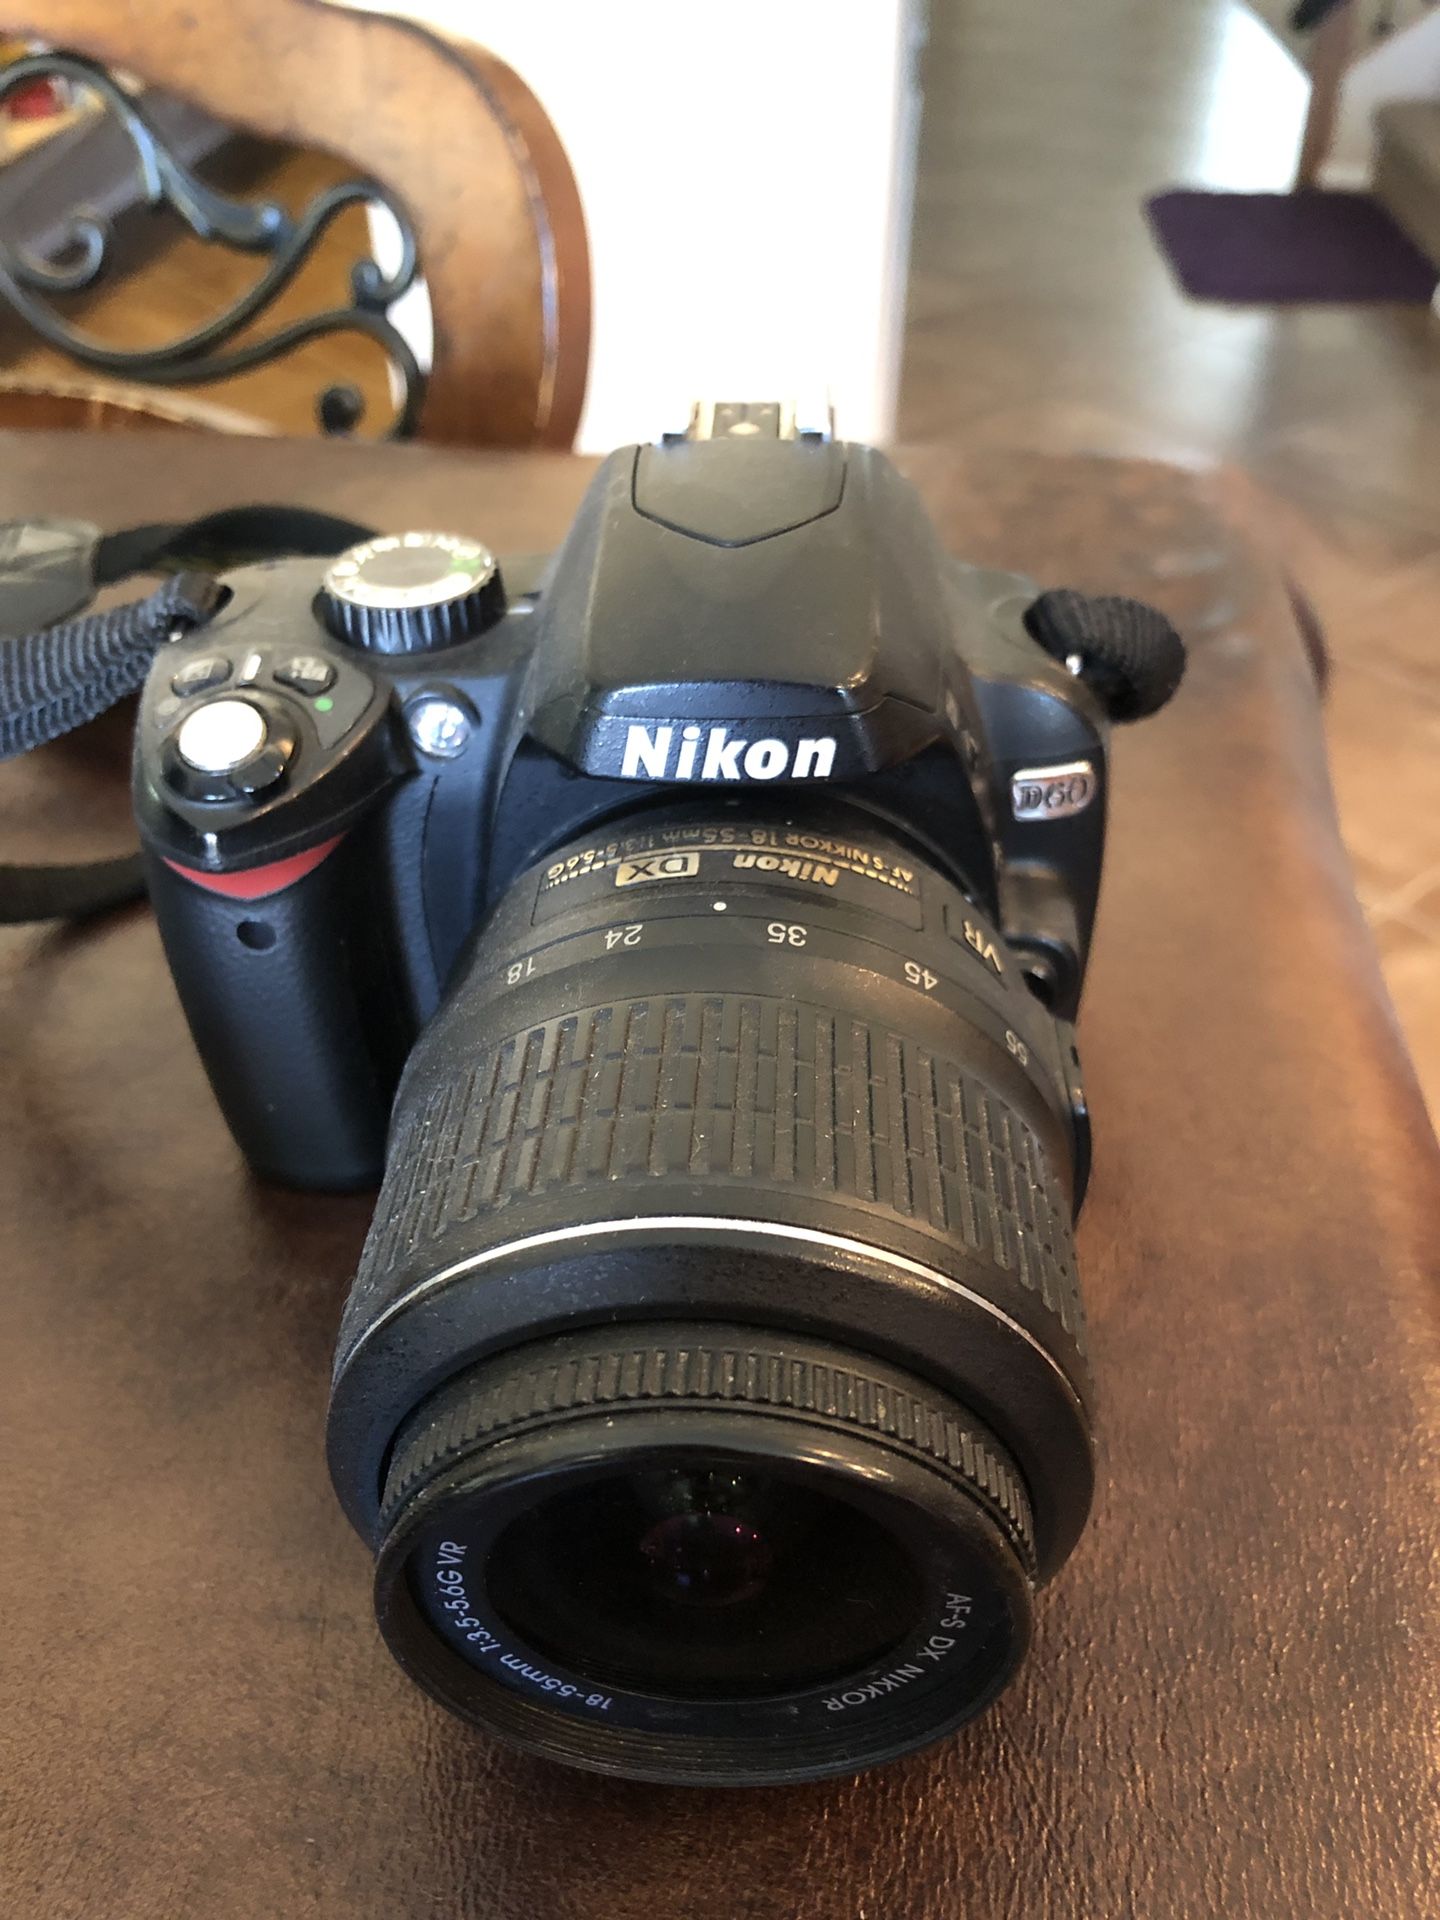 Nikon D60 with multiple lenses